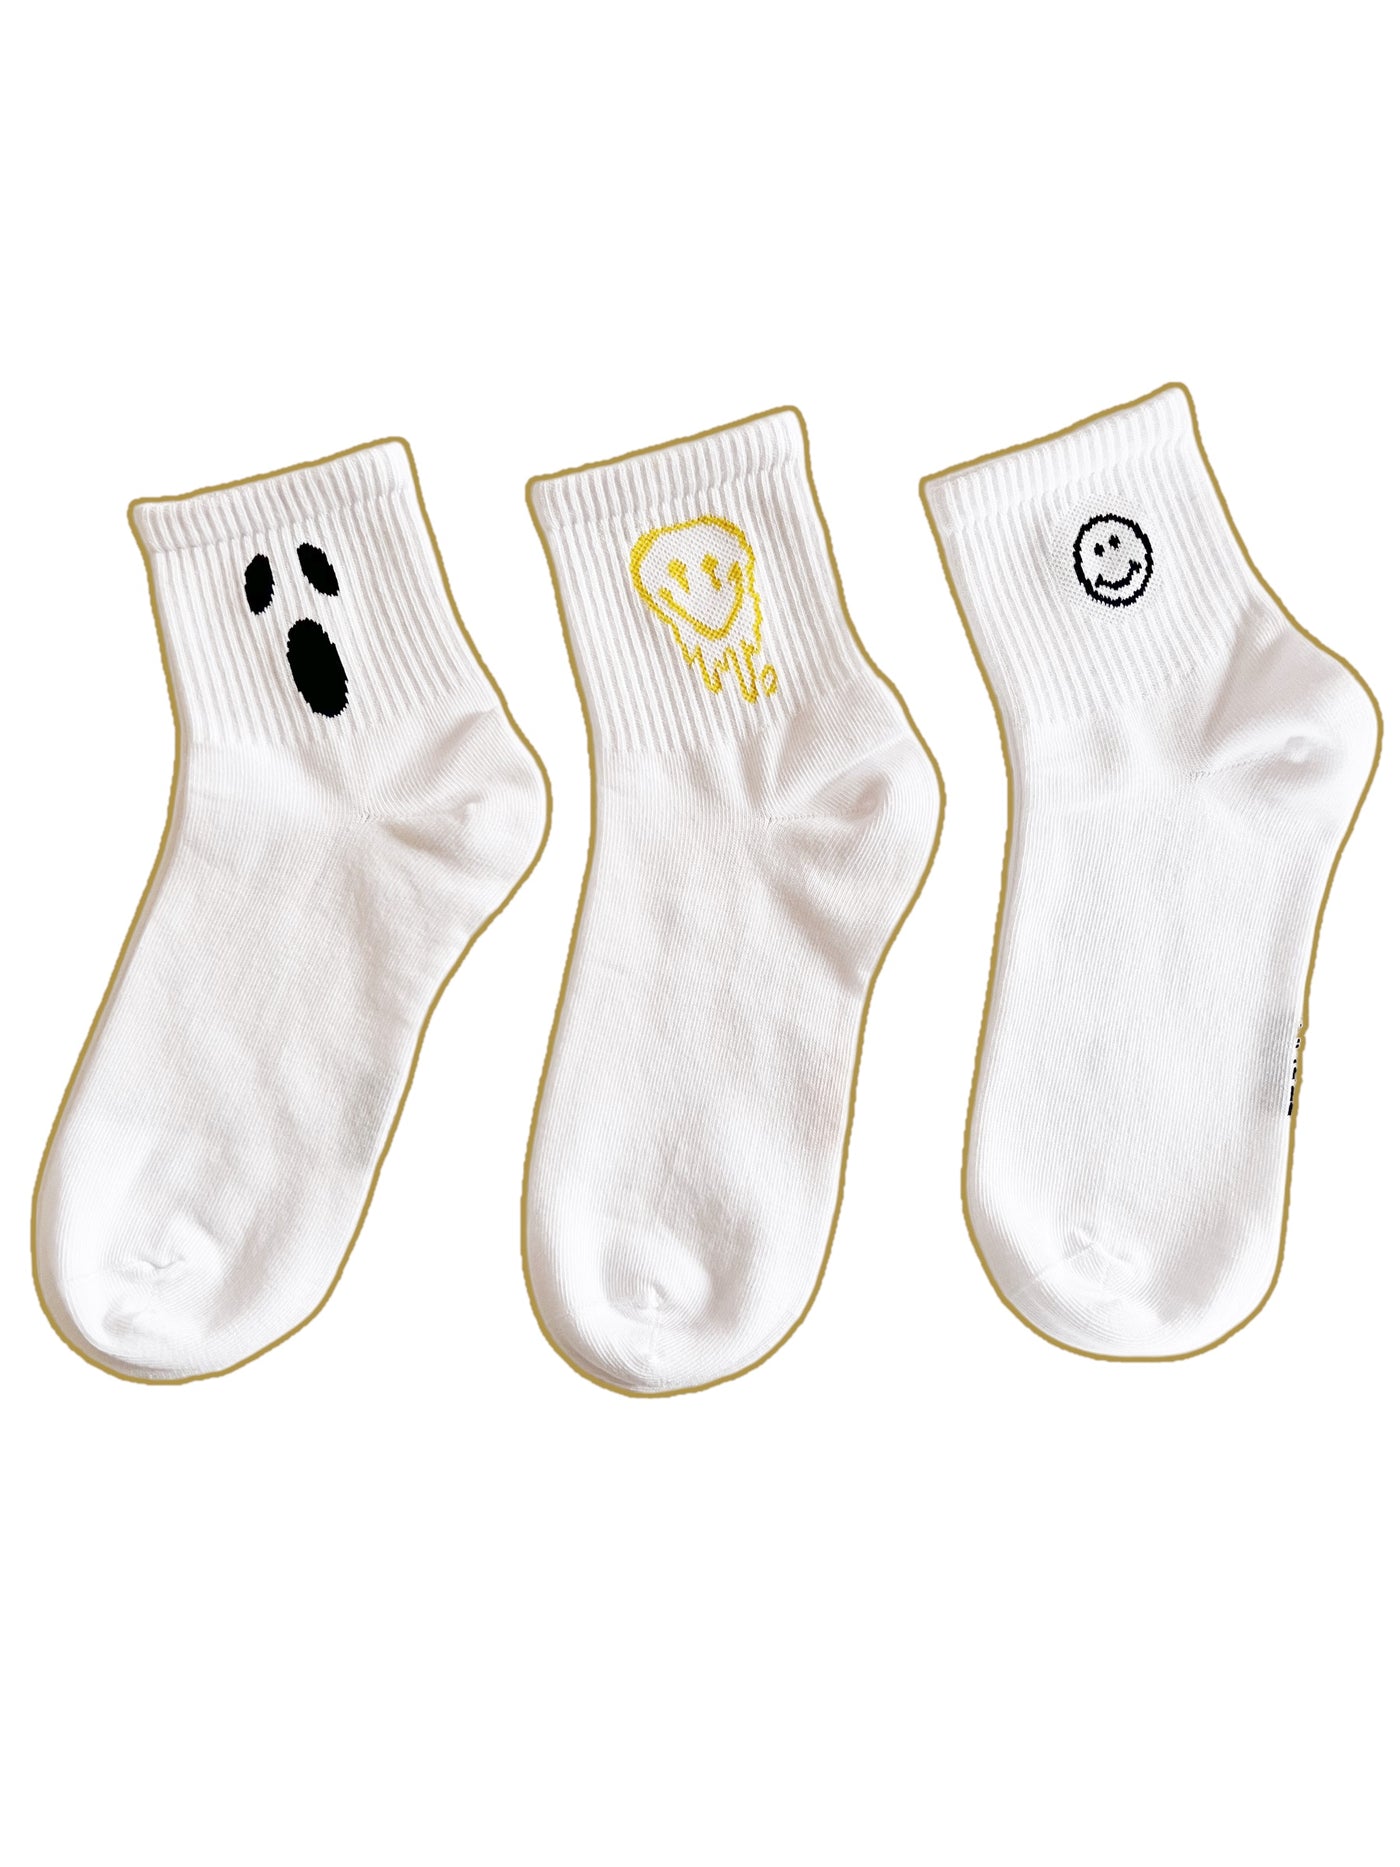 3pcs white embroidery icon socks set 1 - PROBOXS